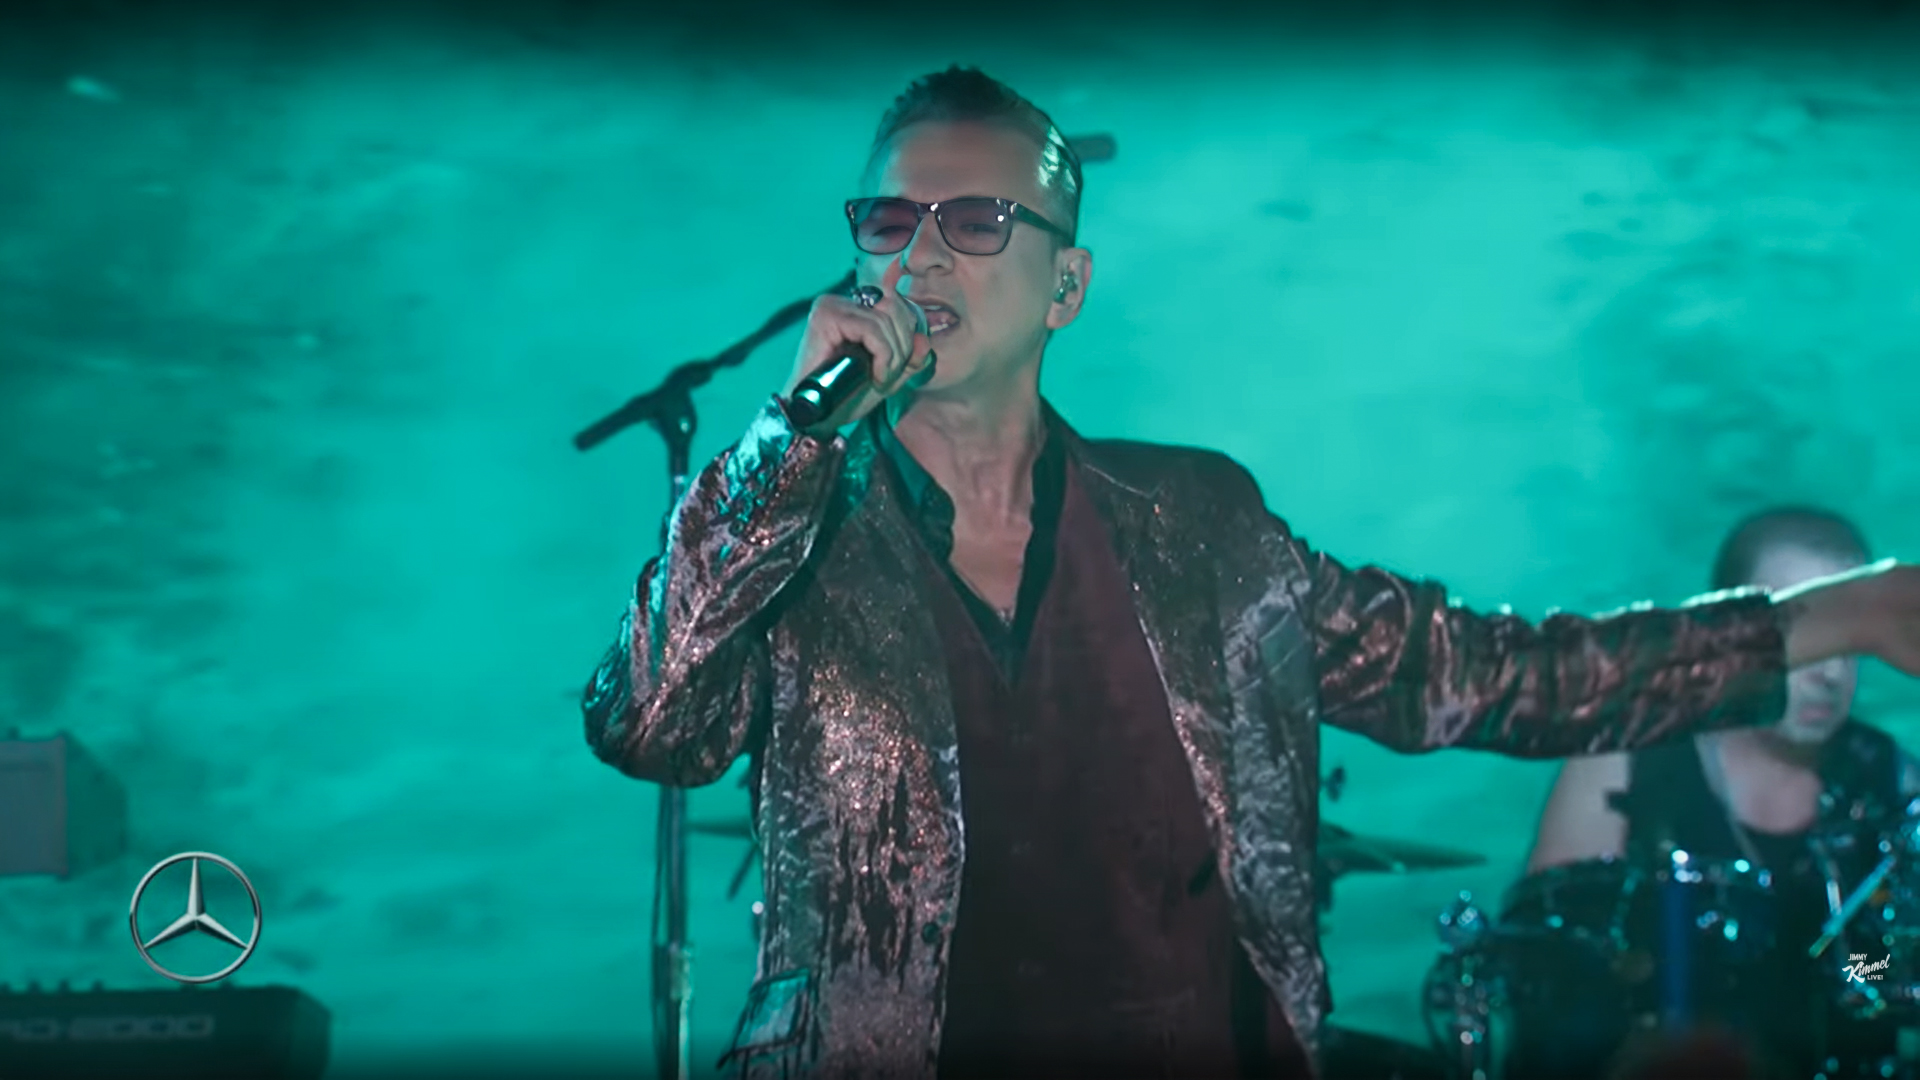 Depeche Mode: The Memento Mori Tour